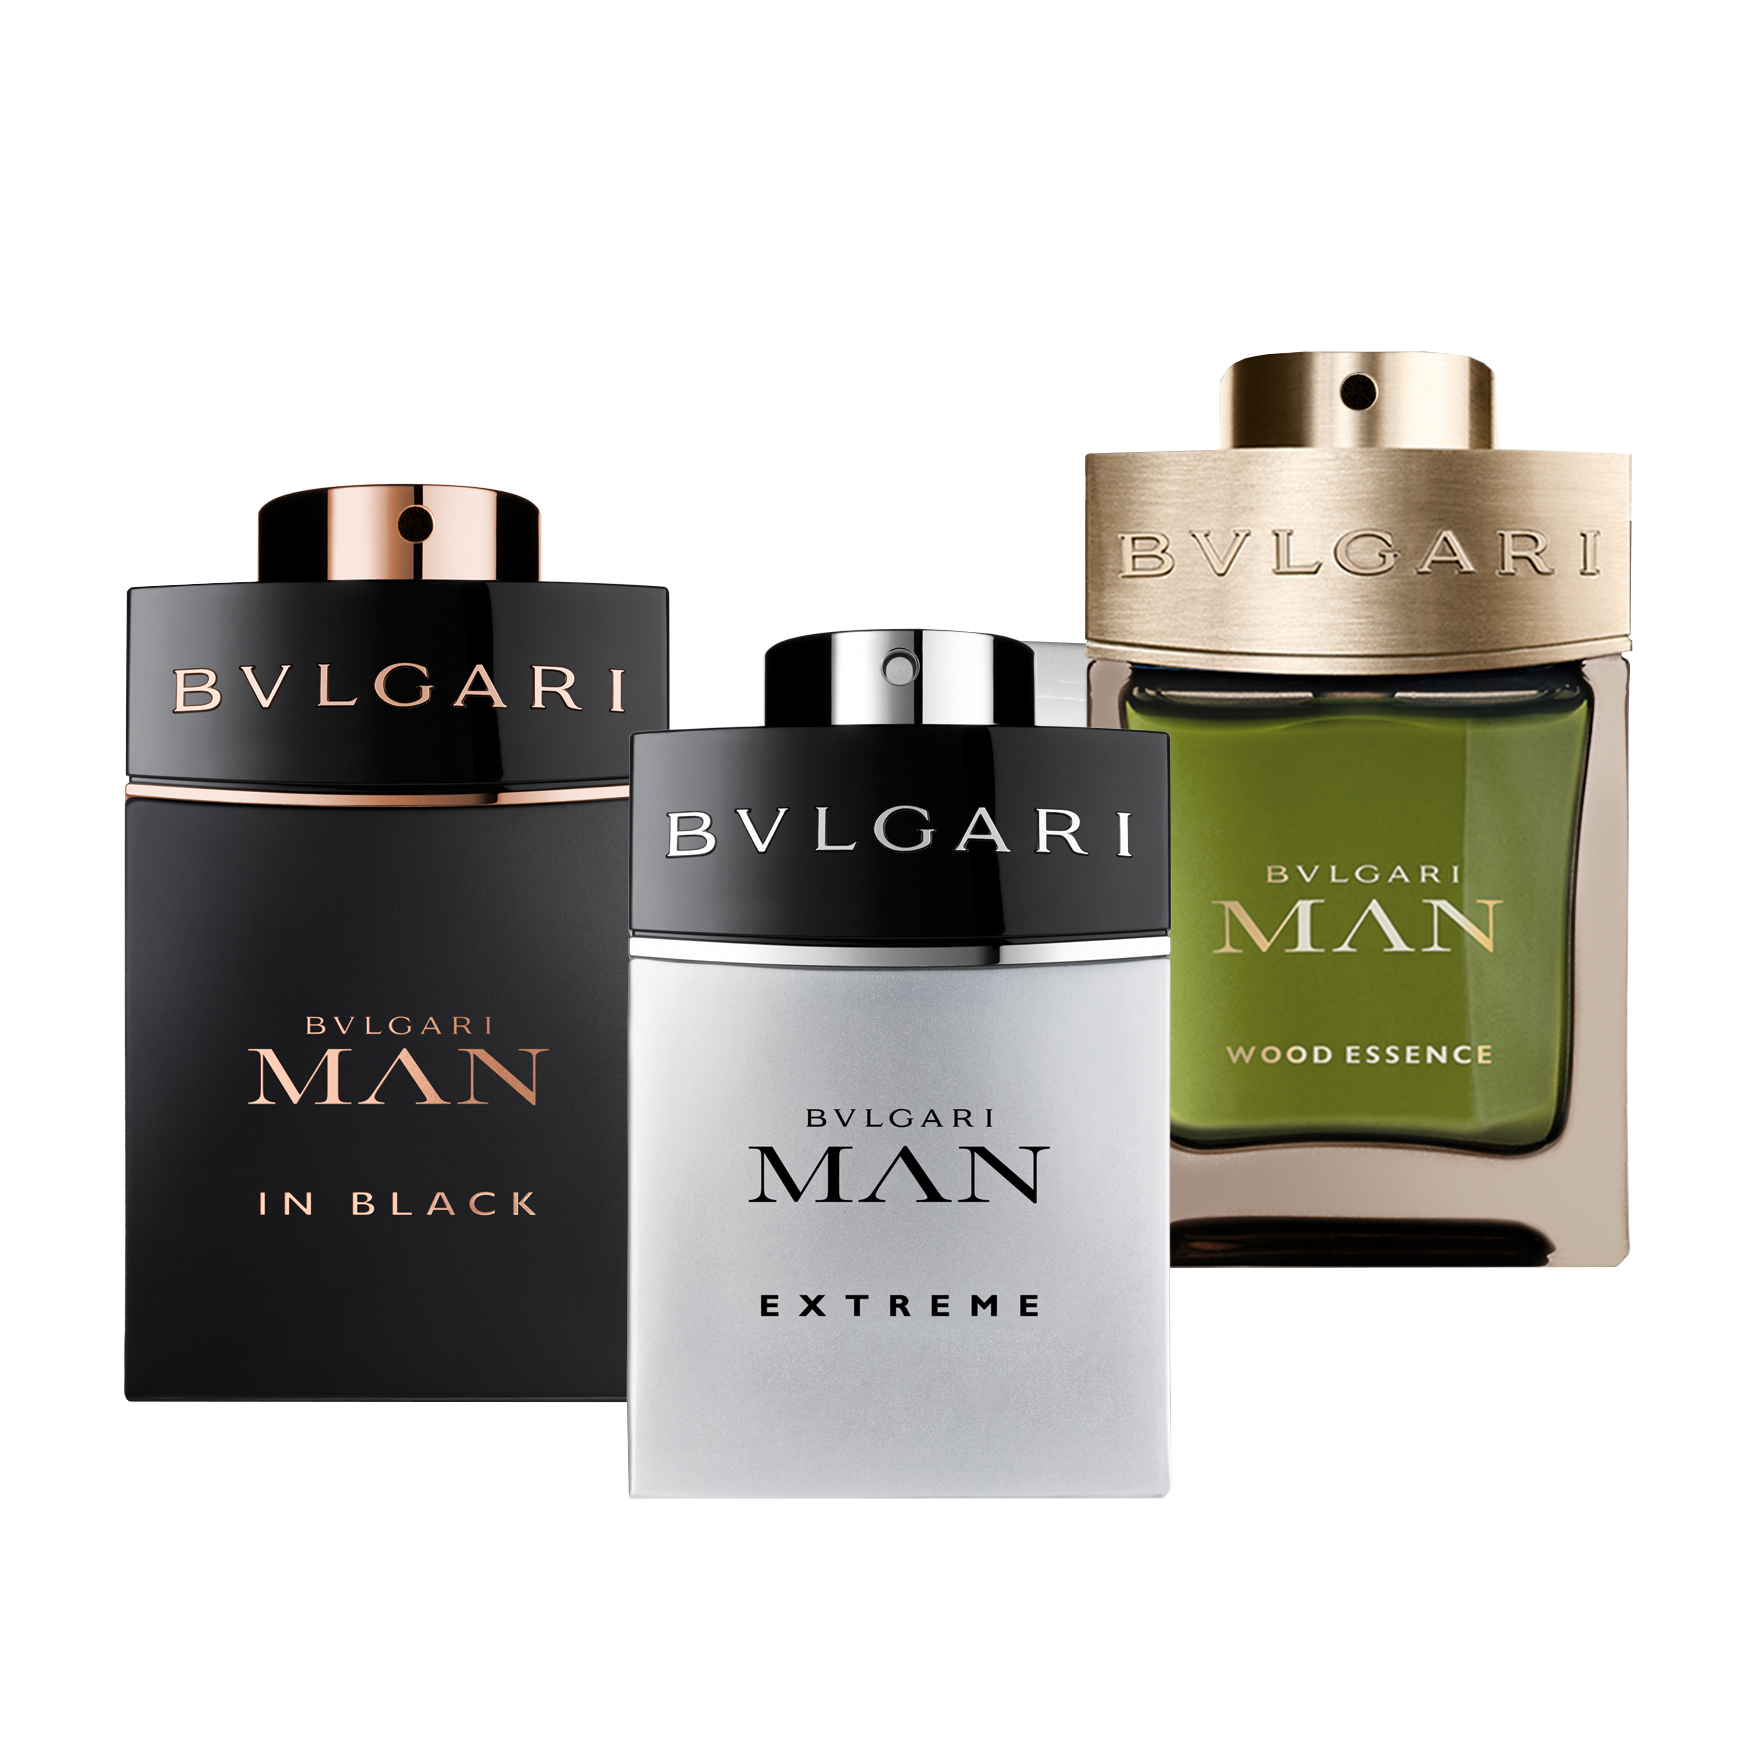 bvlgari perfume travel set